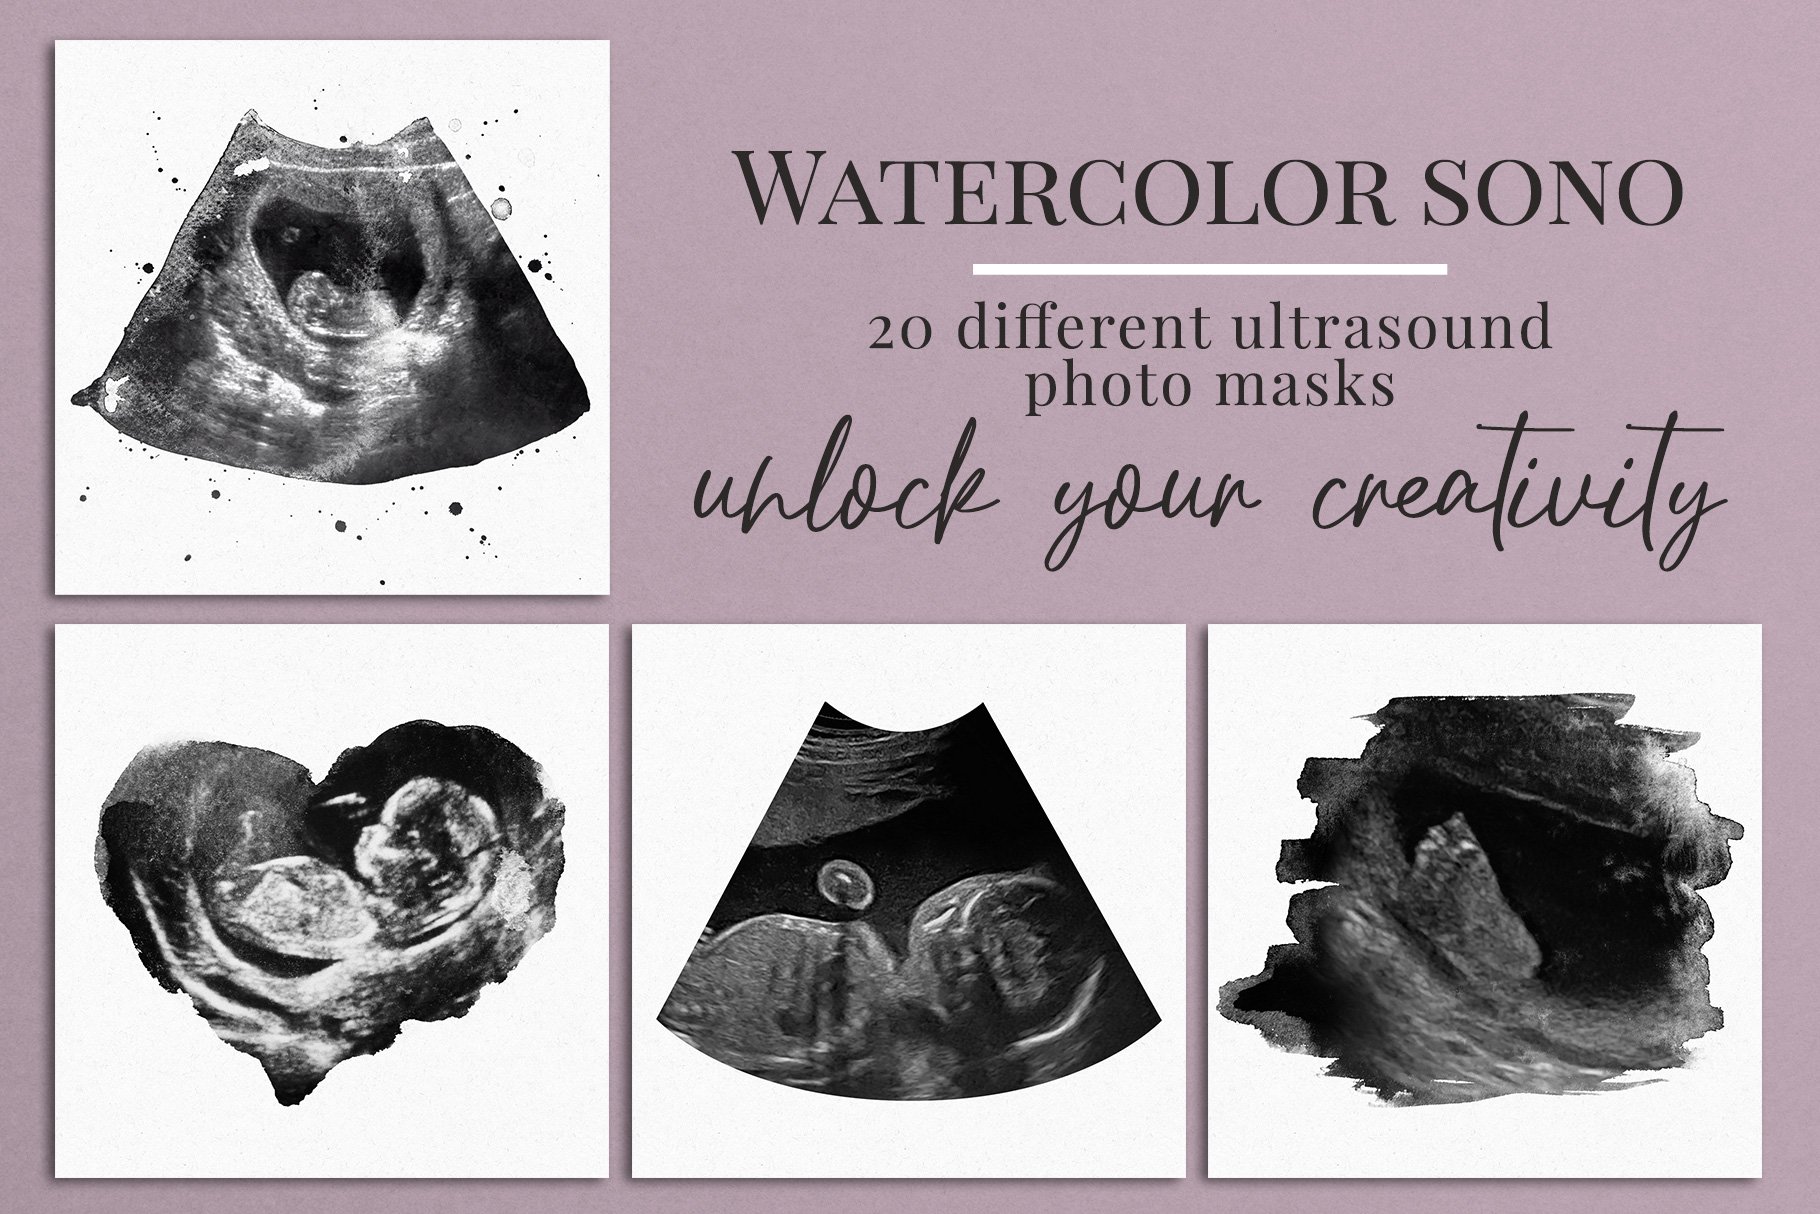 Watercolor ultrasound photomaskscover image.